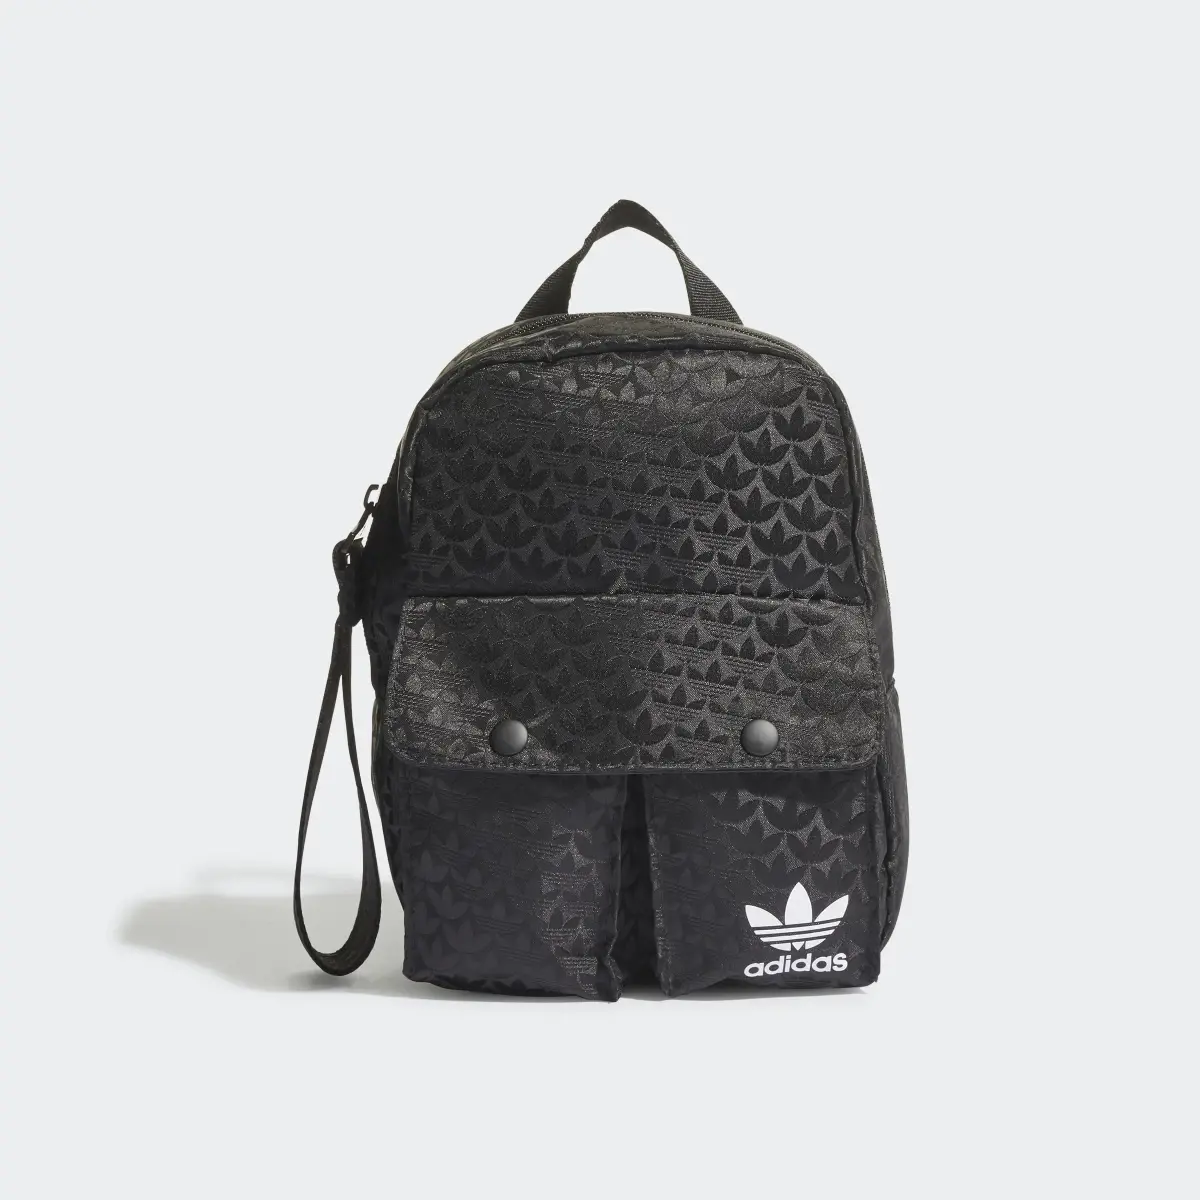 Adidas Mini sac à dos. 2